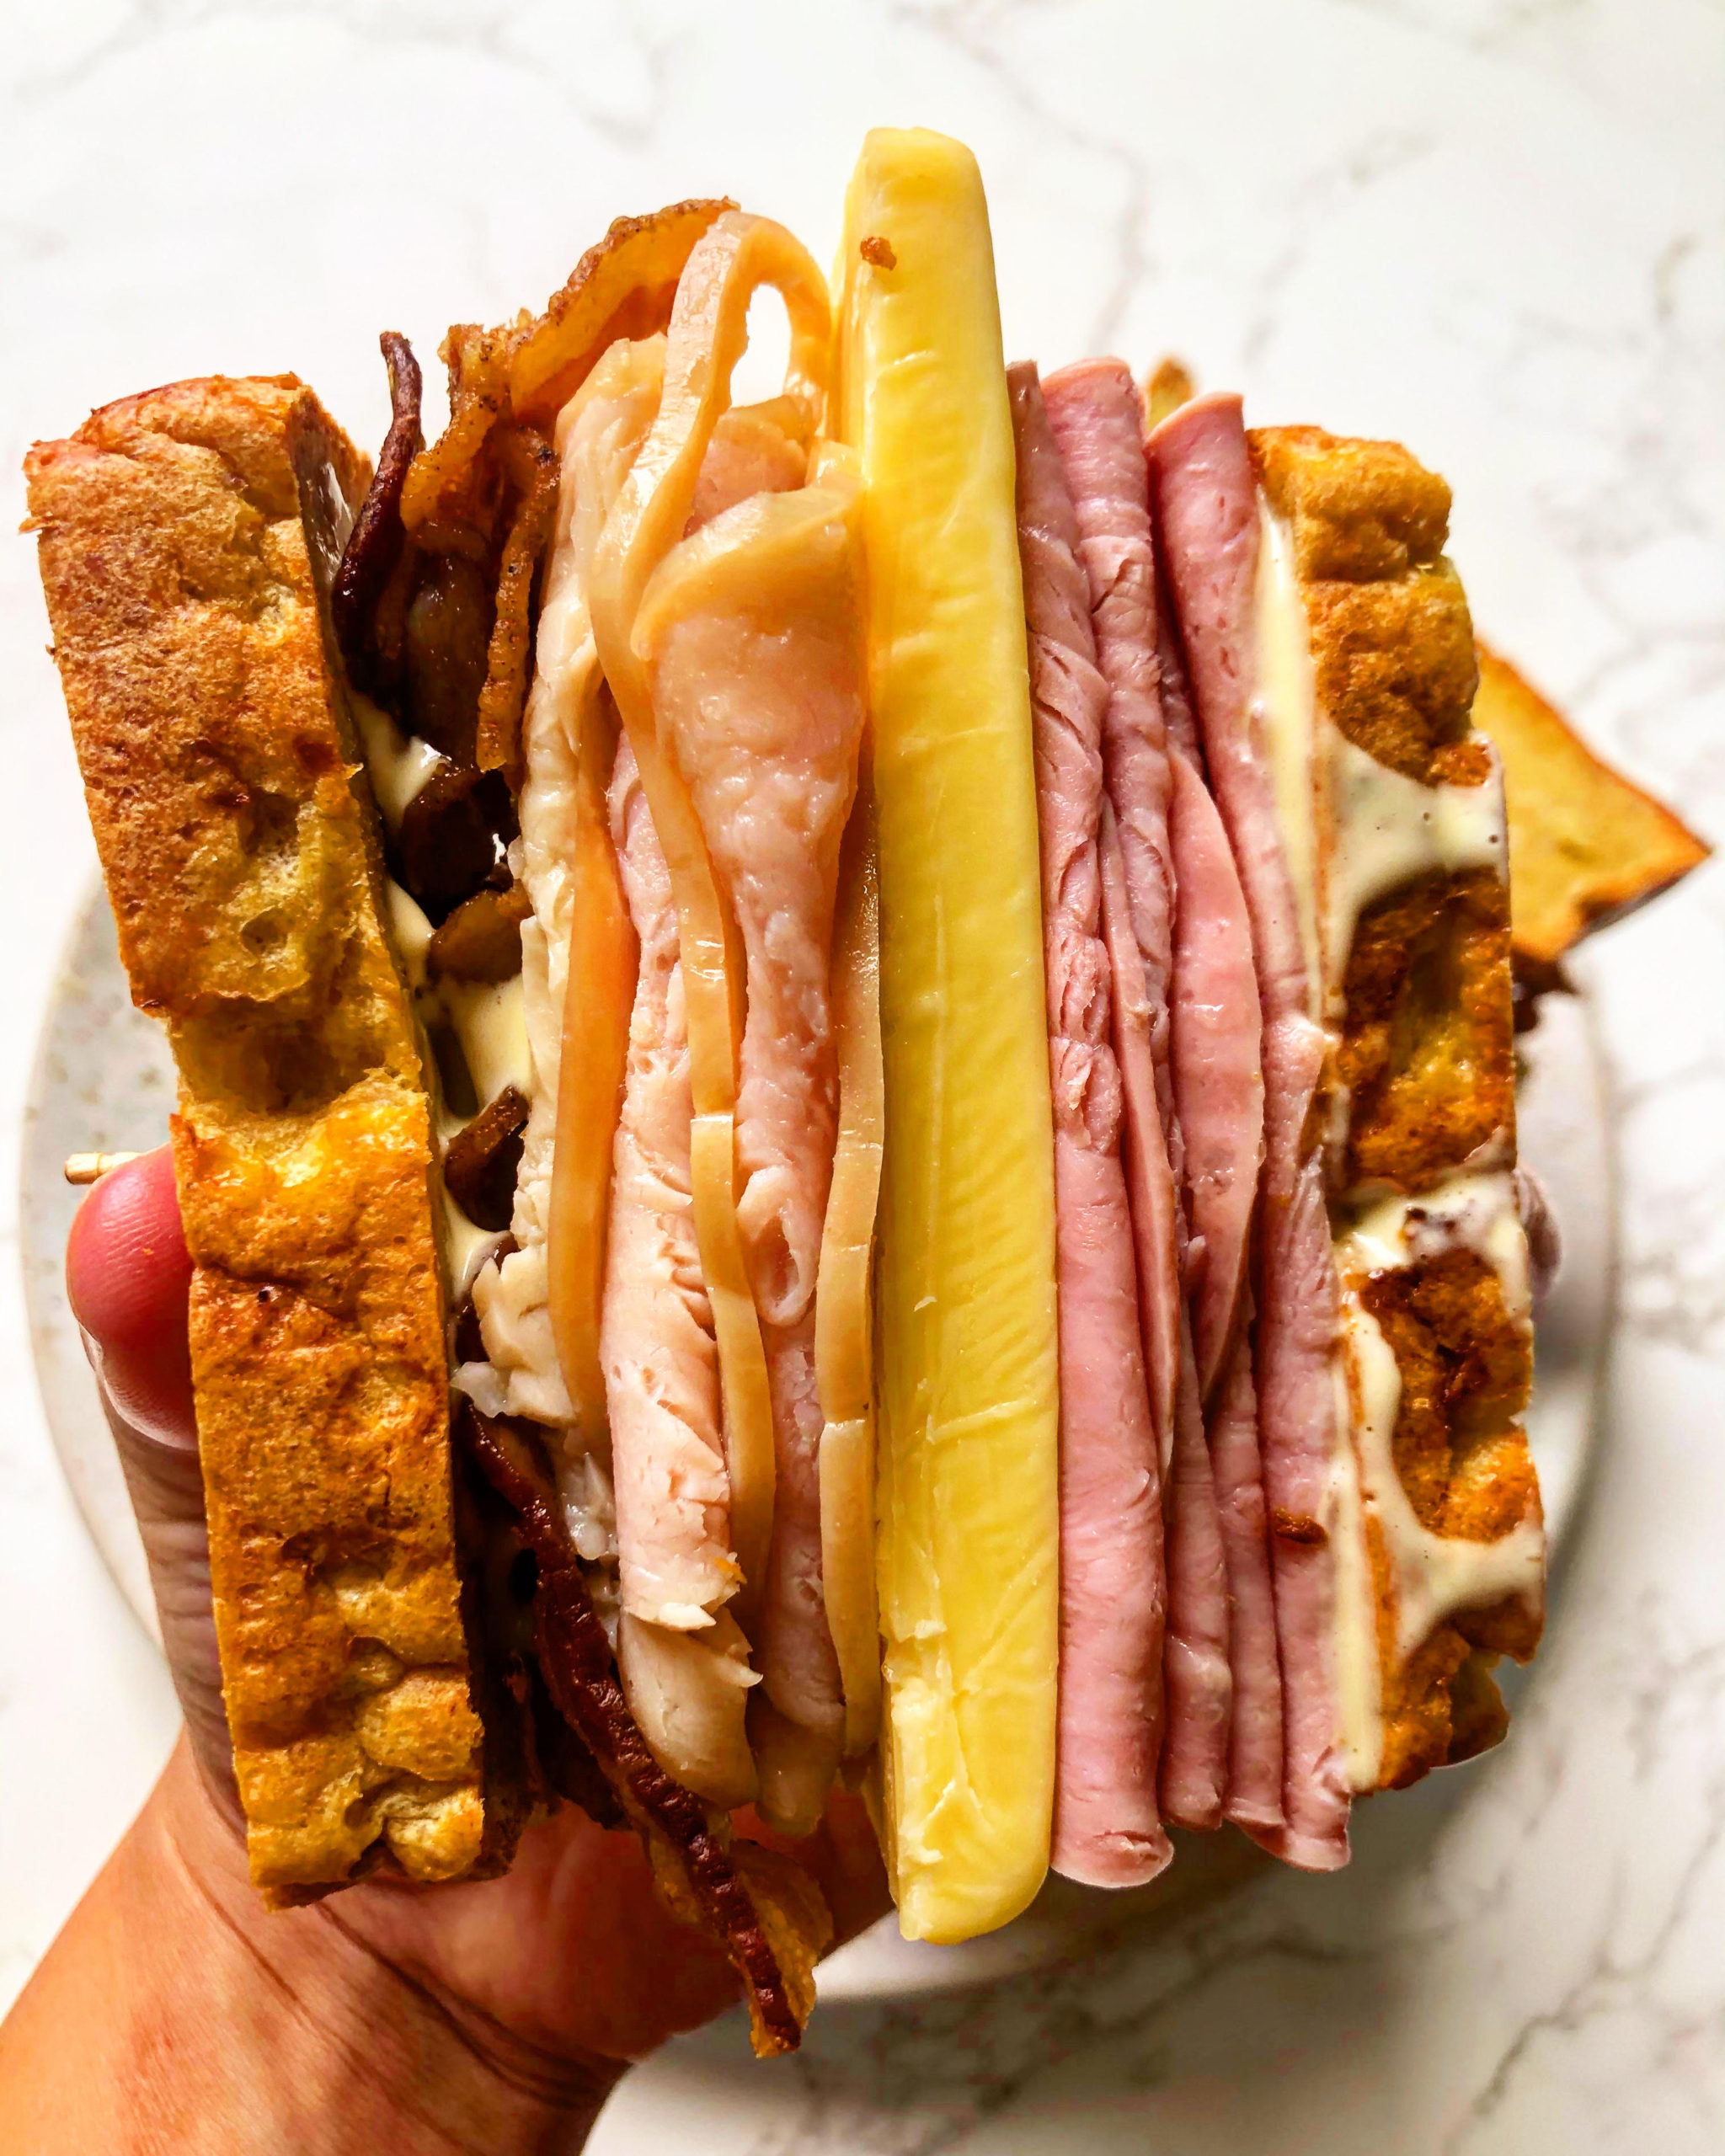 carnivore diet recipes club sandwich